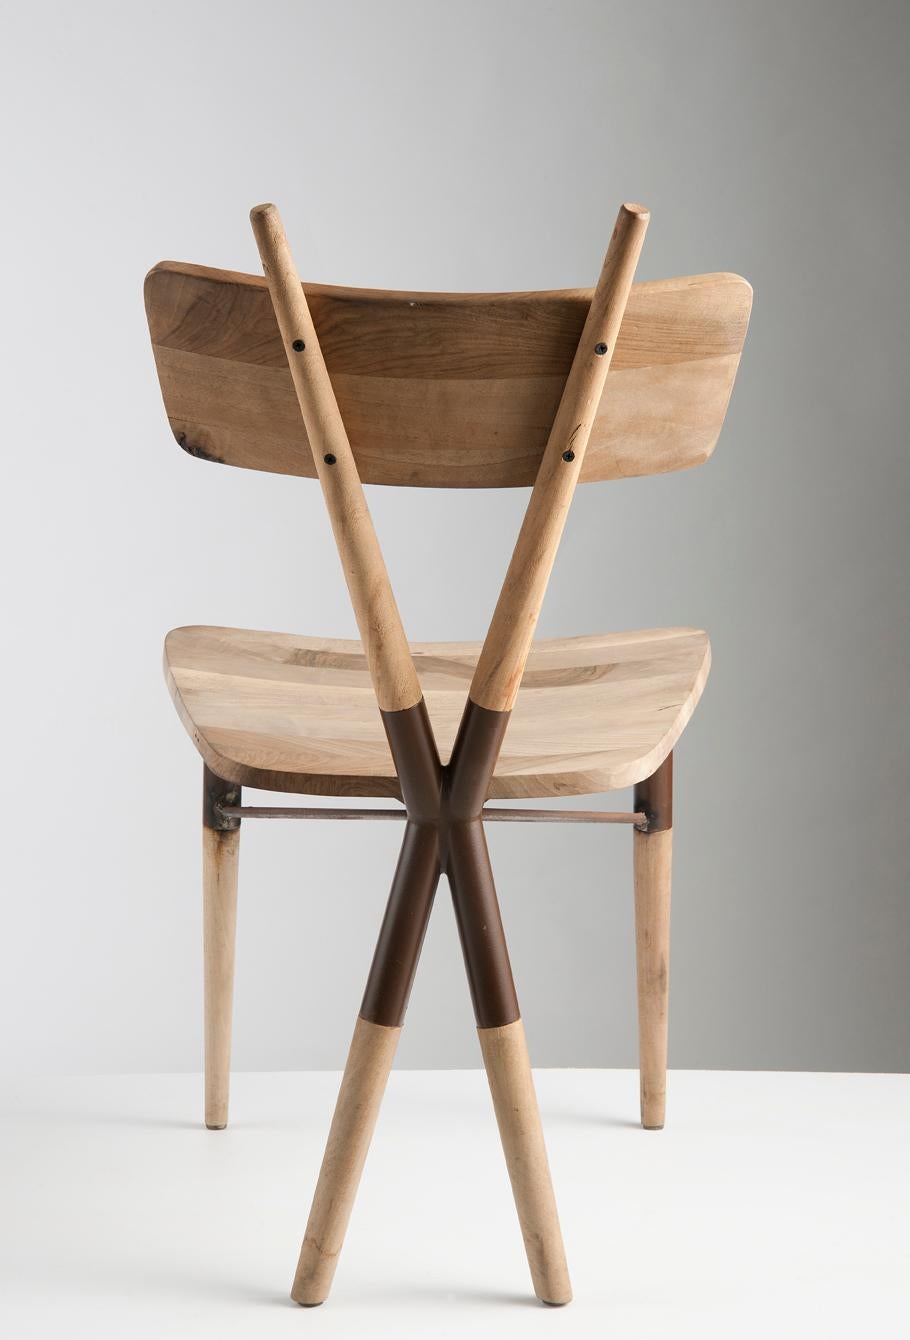 X Wooden Chair by Sema Topaloglu 1